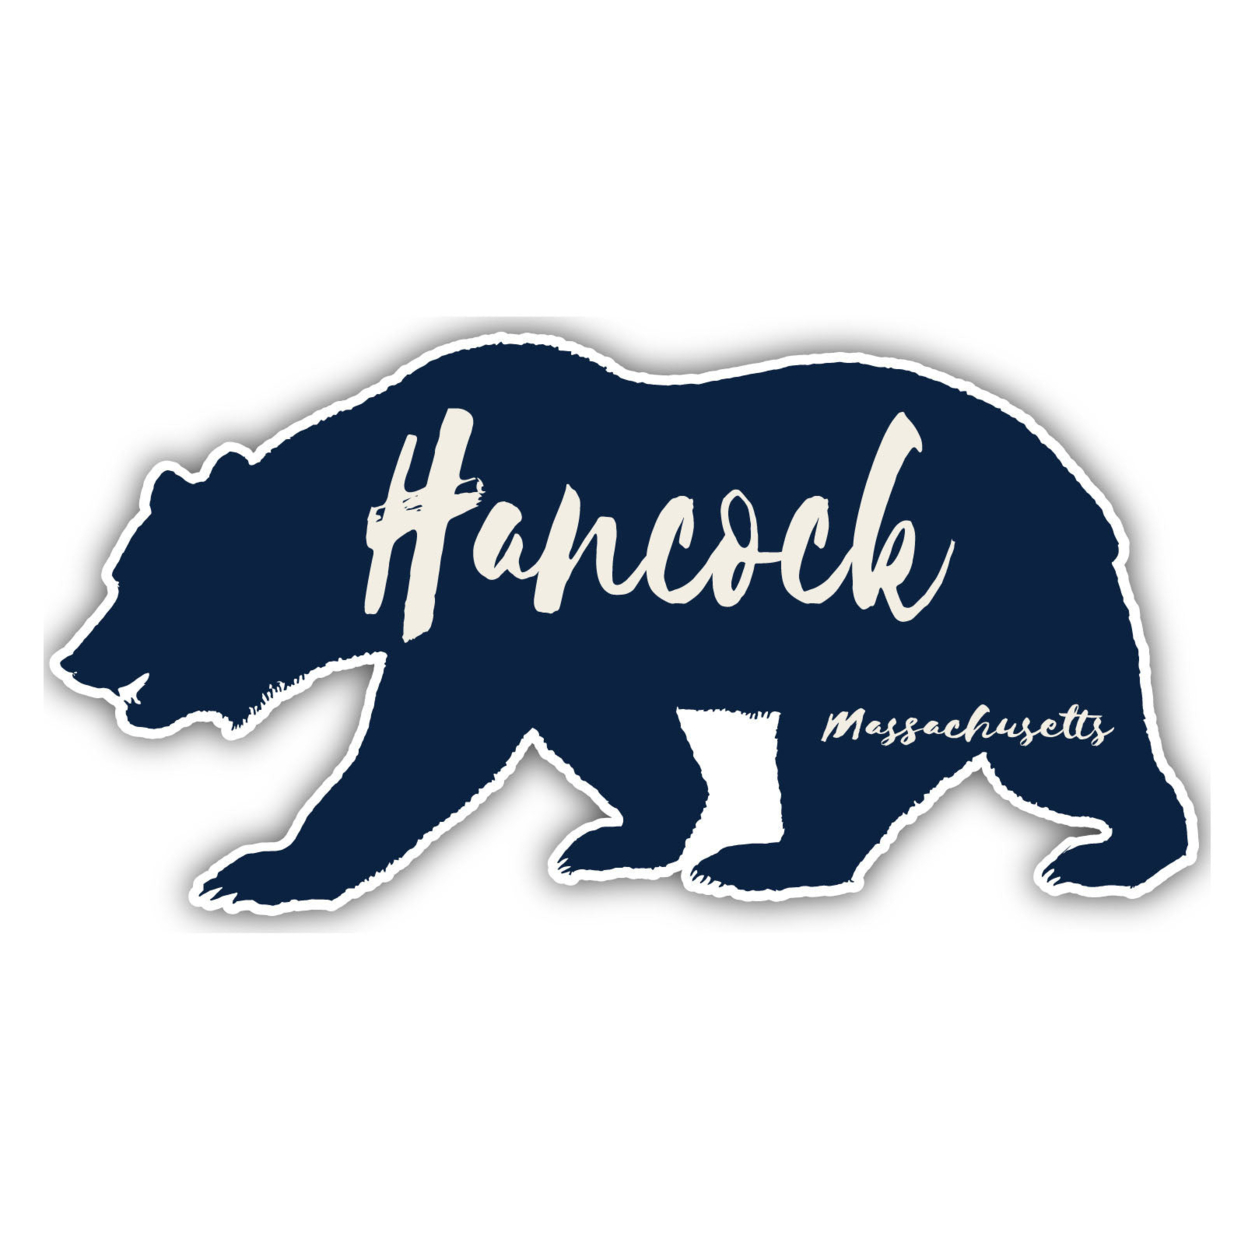 Hancock Massachusetts Souvenir Decorative Stickers (Choose Theme And Size) - Single Unit, 6-Inch, Tent